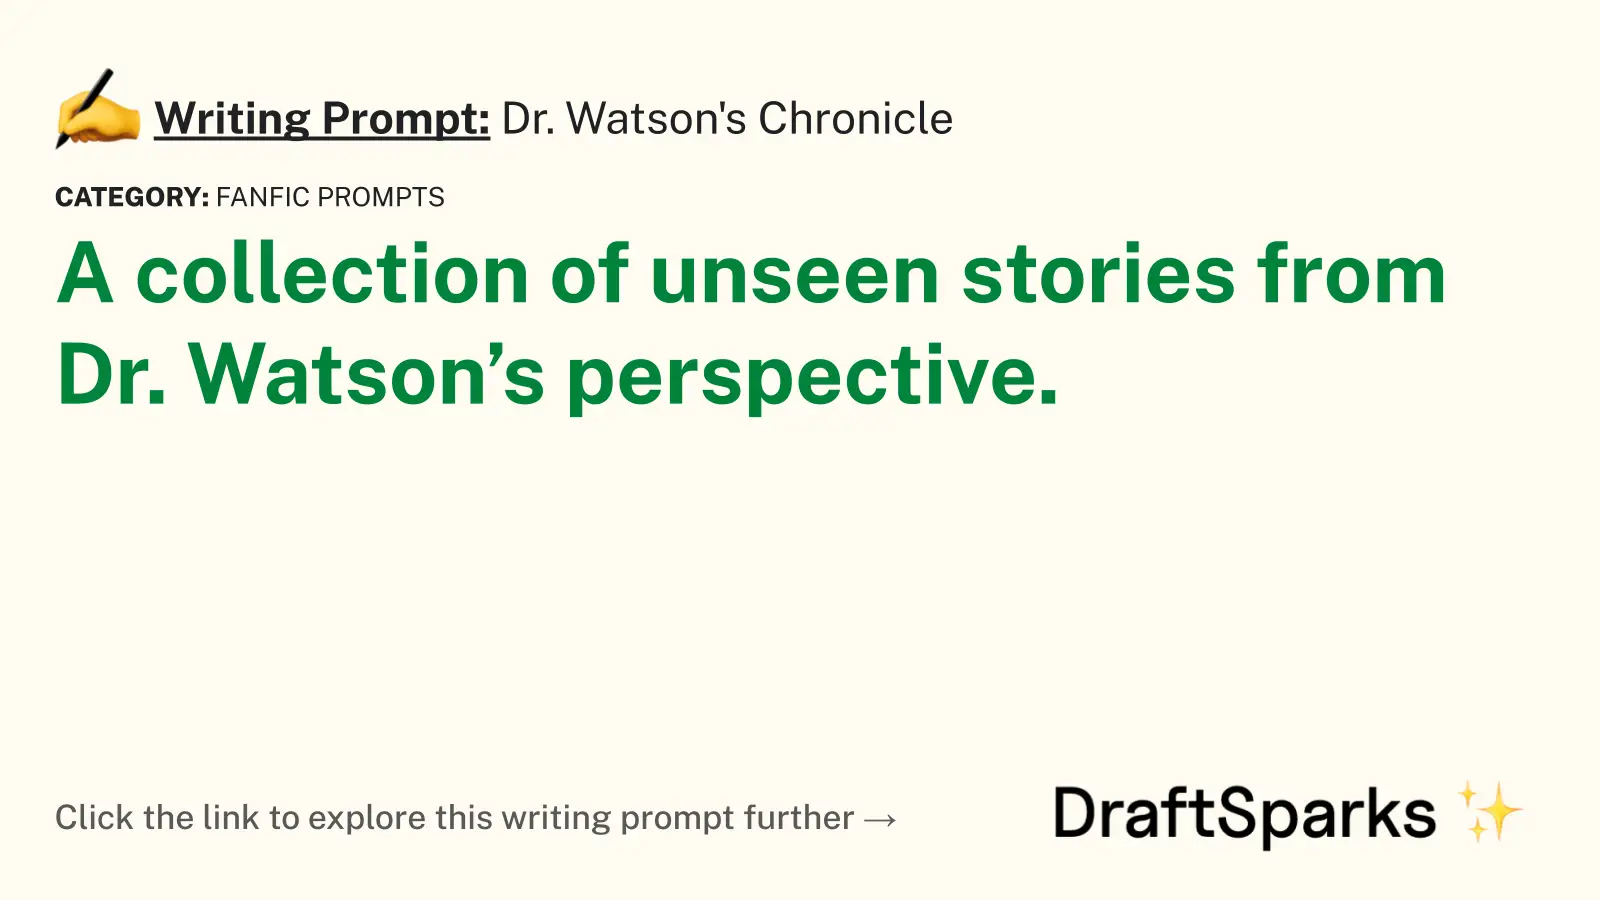 Dr. Watson’s Chronicle